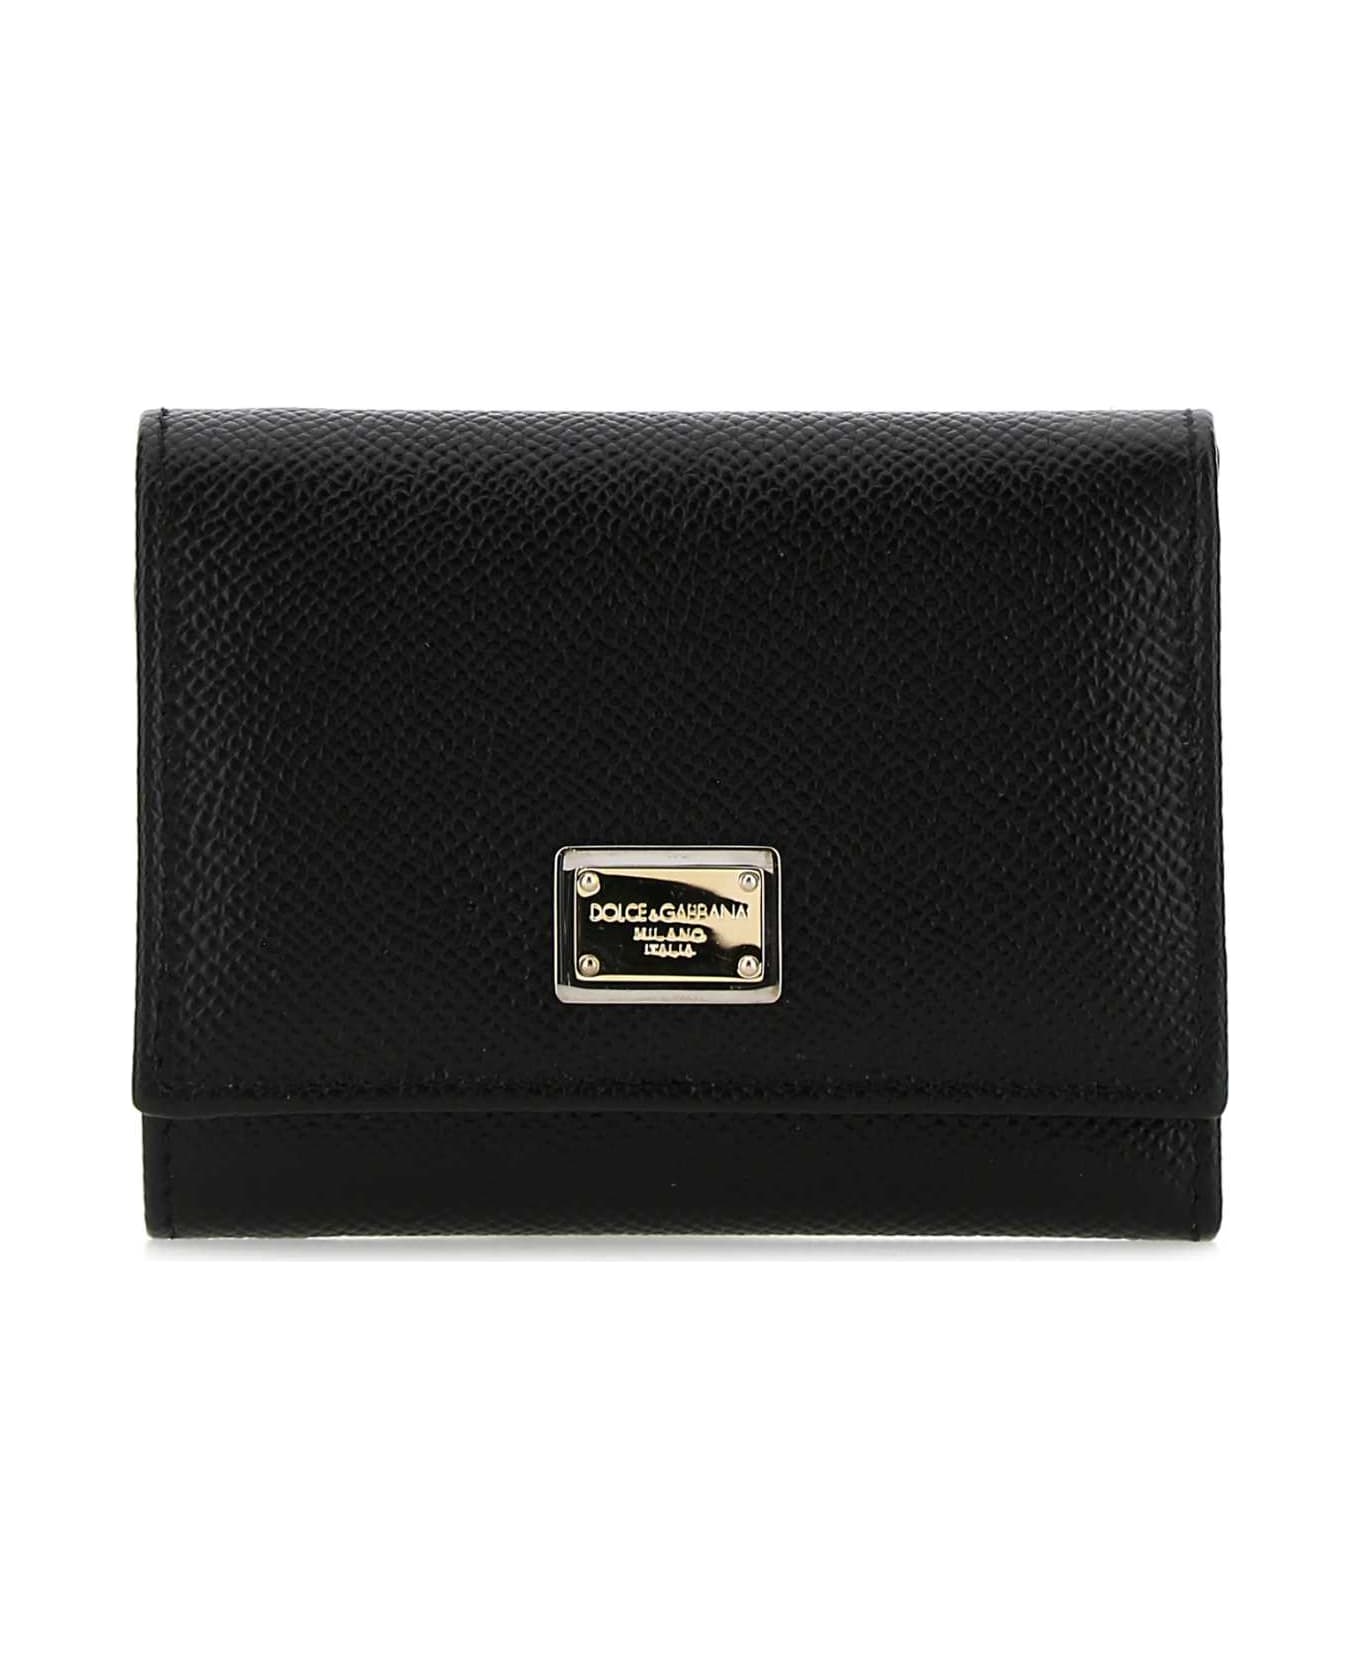 Dolce & Gabbana Black Leather Wallet - 80999